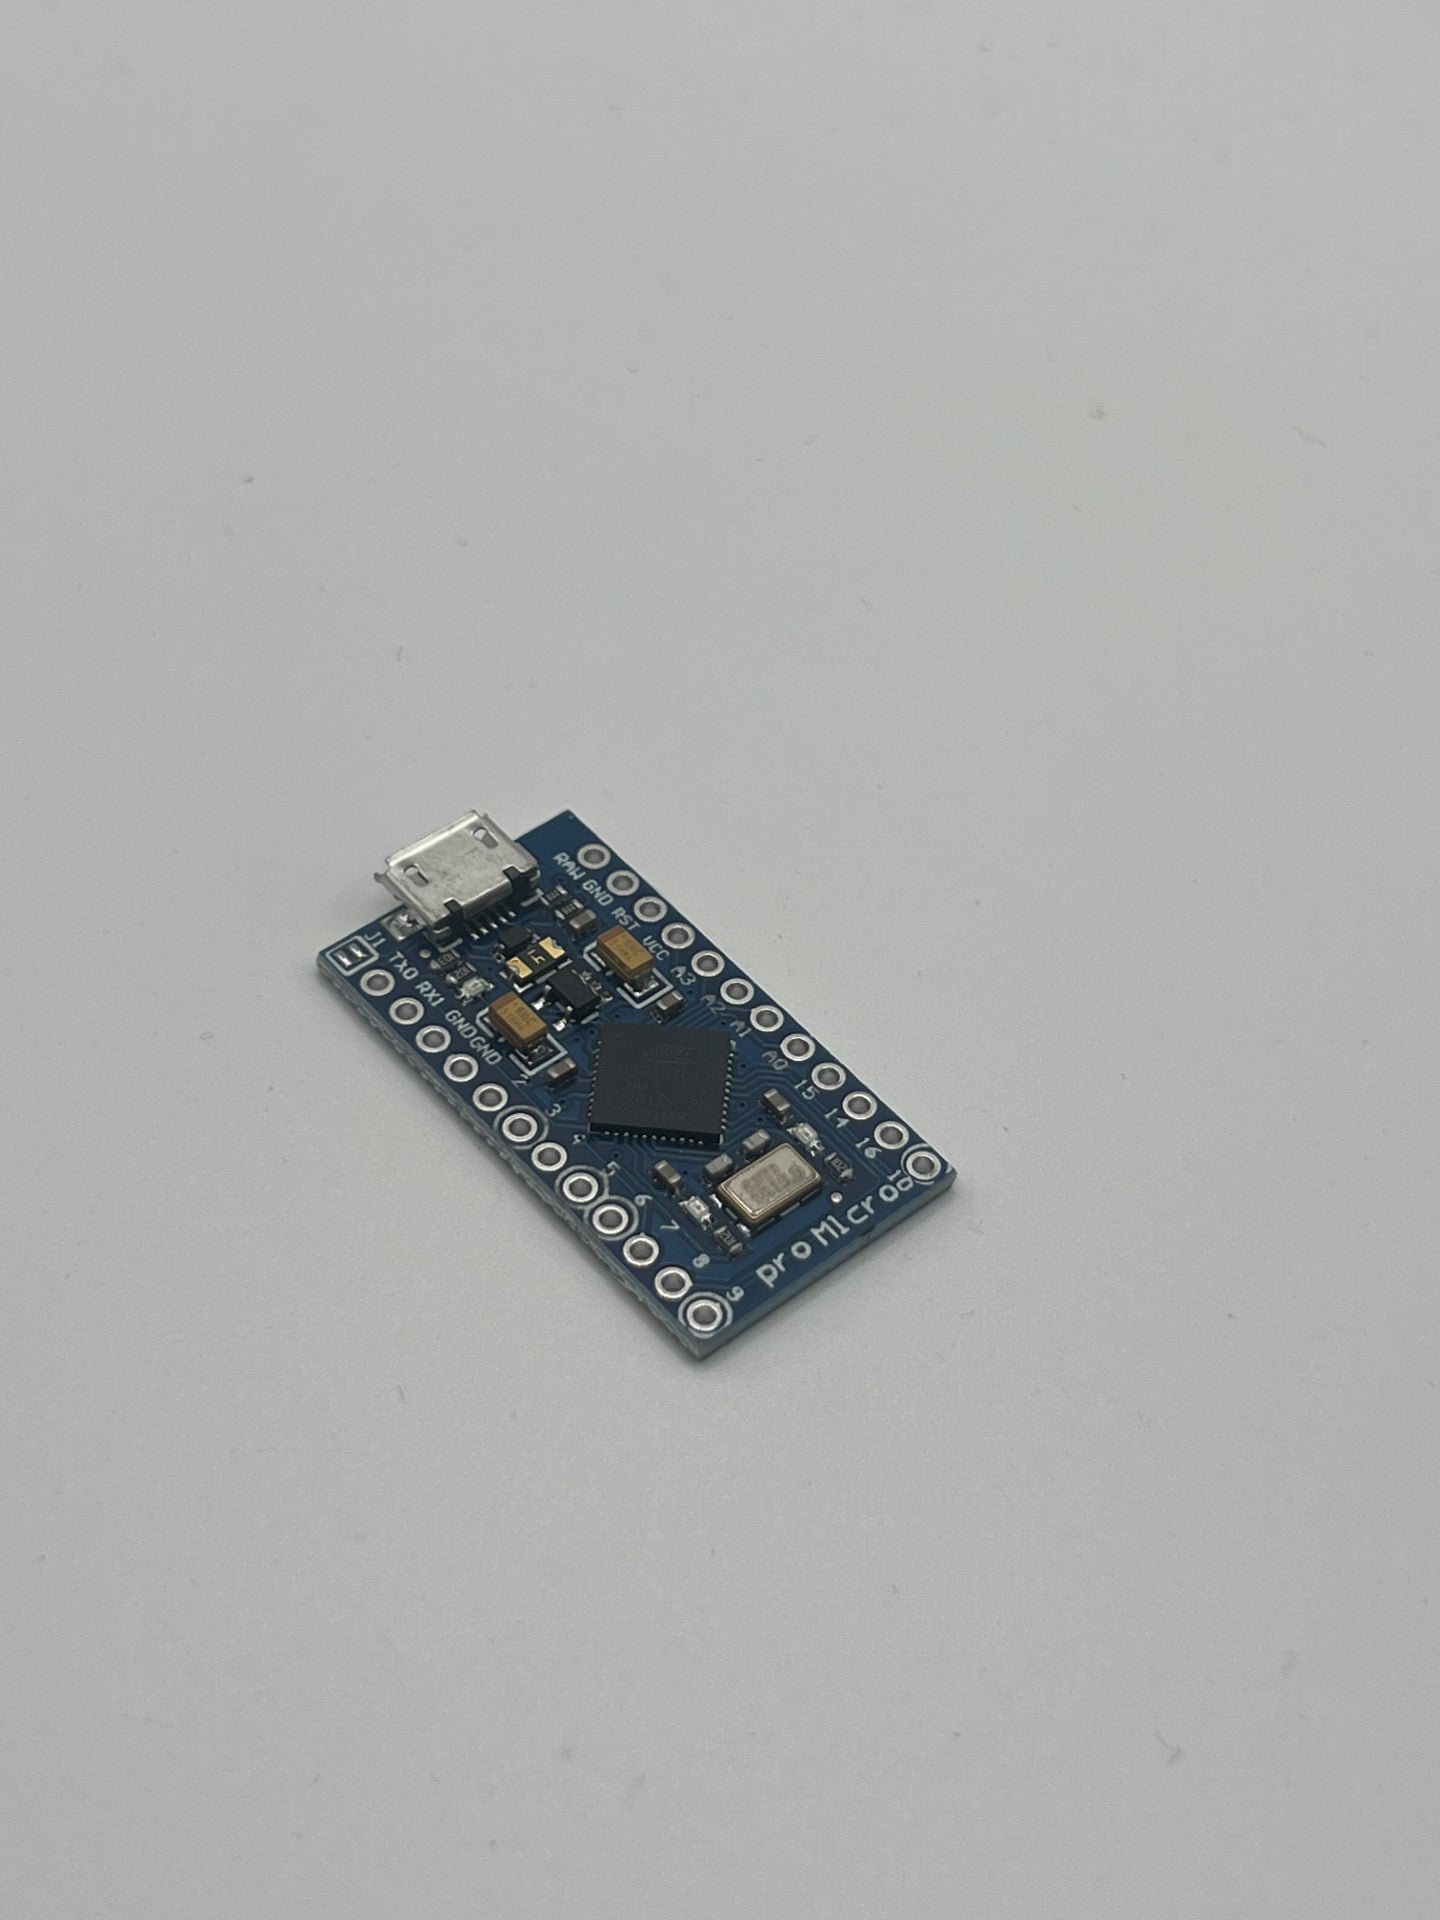 Pro Micro ATmega32U4 5V 16MHz Micro-USB Development Module Board with 2 Row Pin Header.